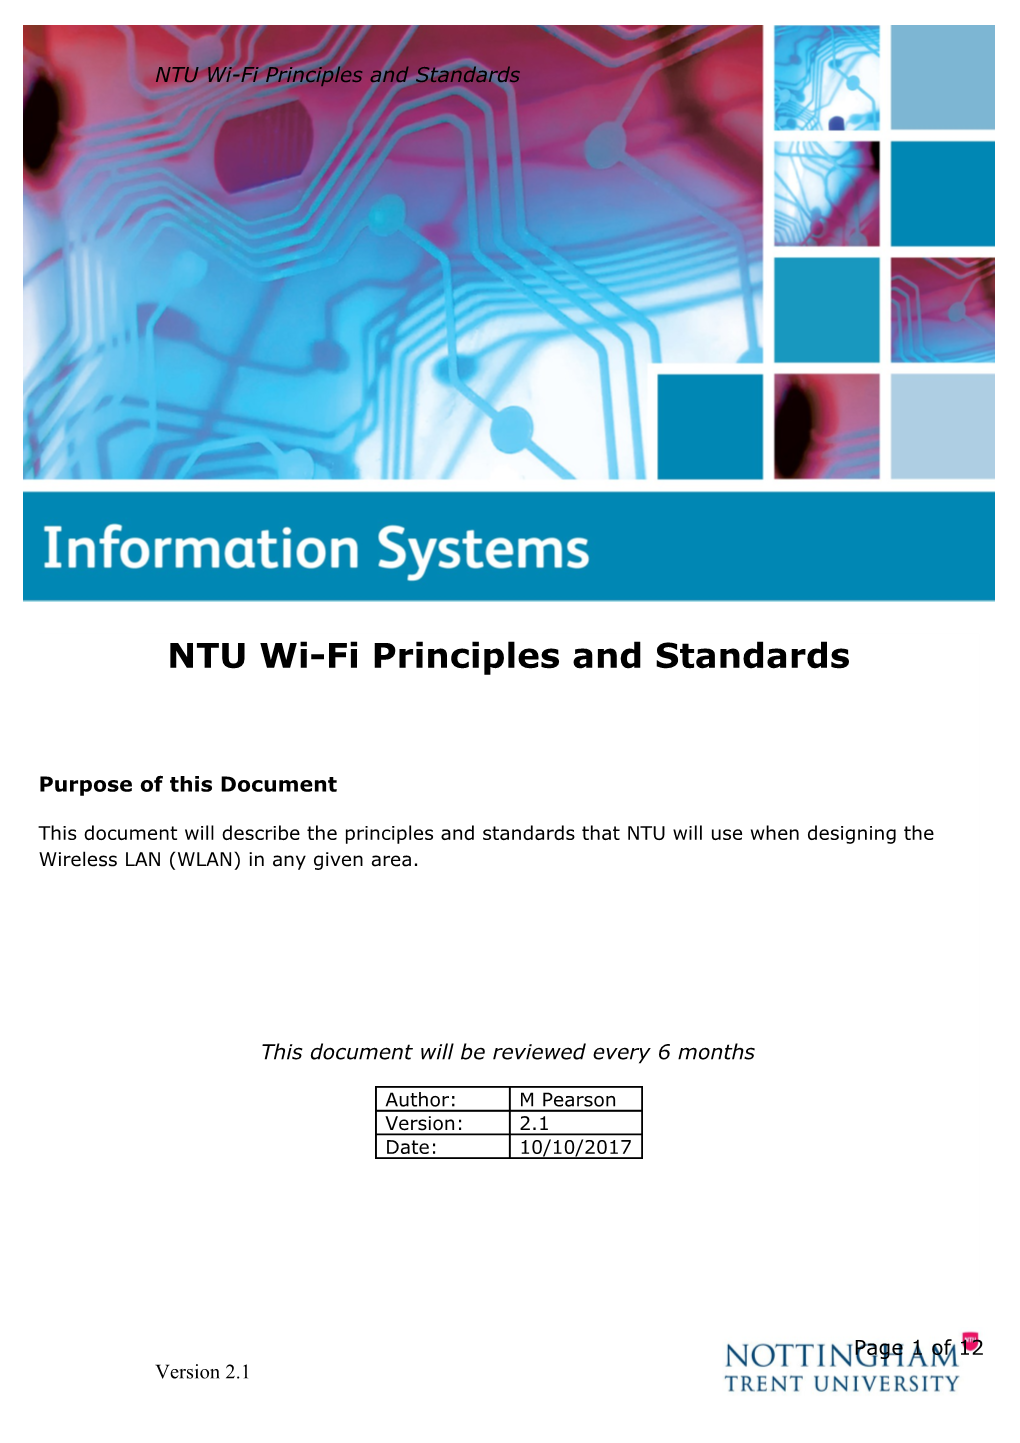 NTU Wi-Fi Principles and Standards